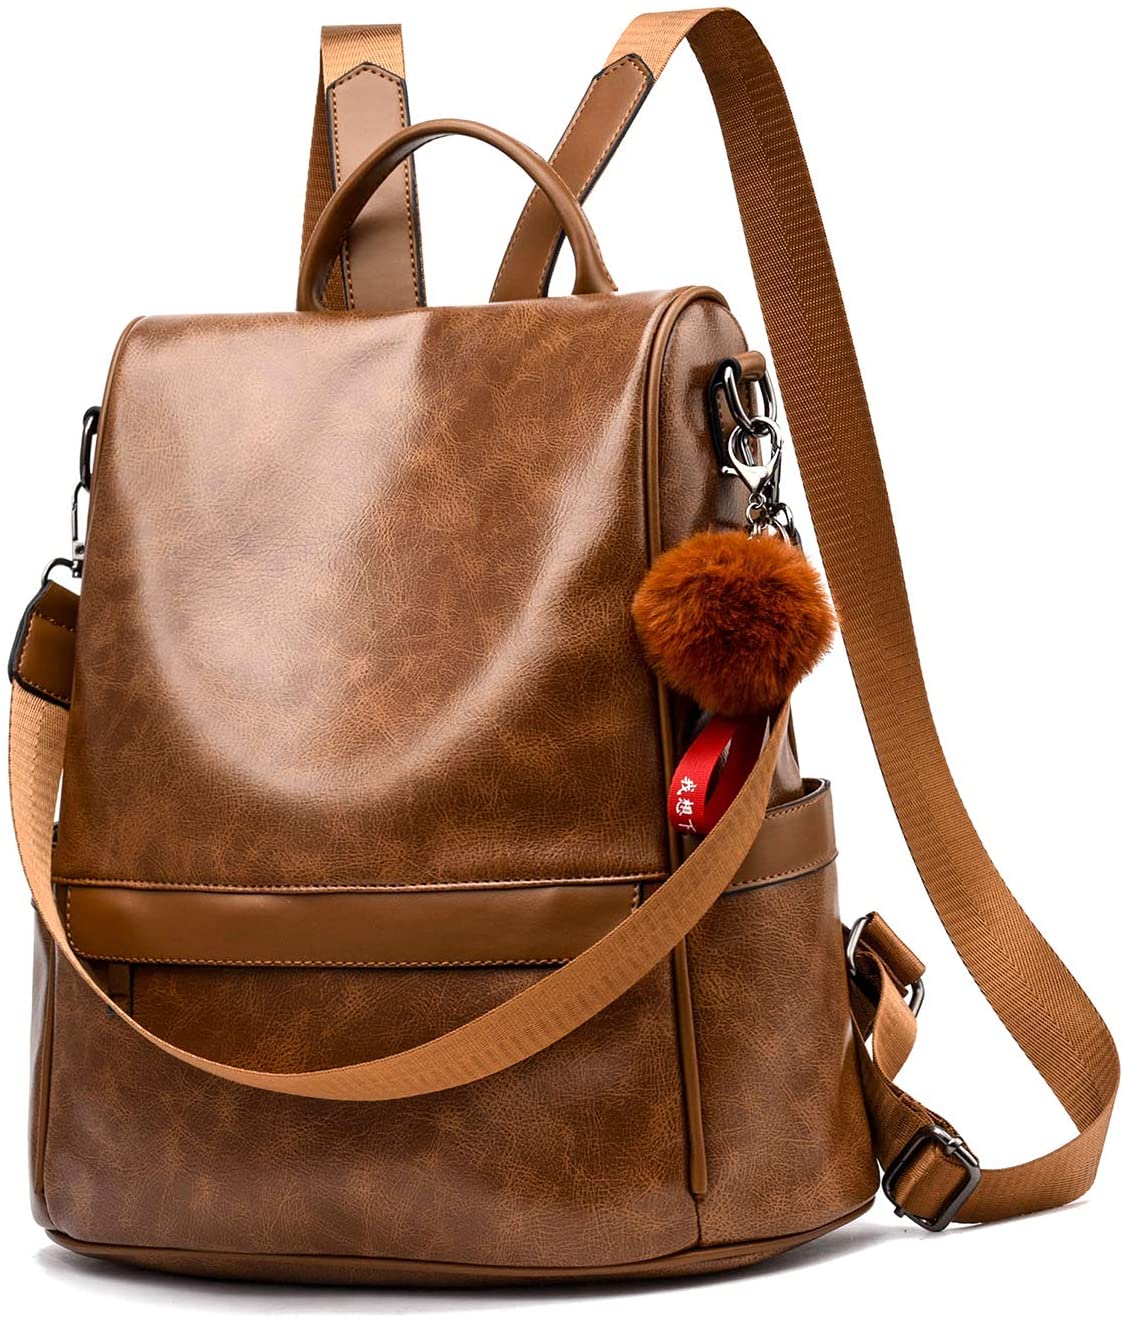 Cheruty Faux Leather Backpack For Women